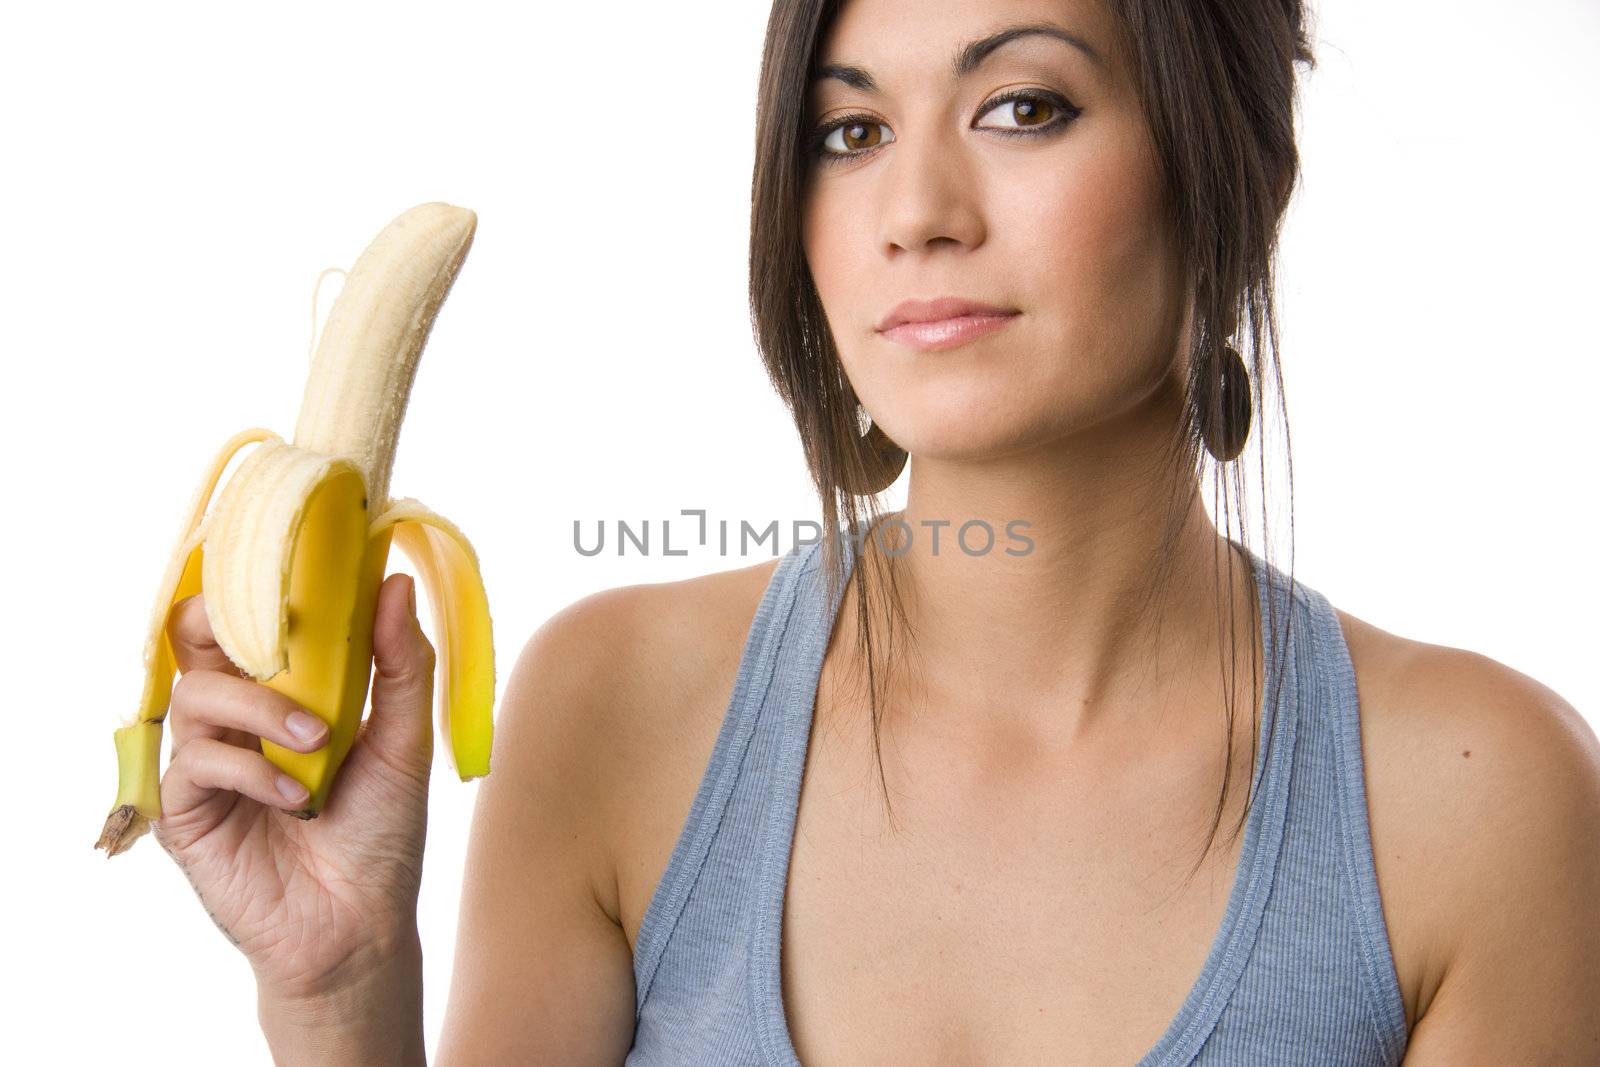 Beautiful Brunette holds a Banana